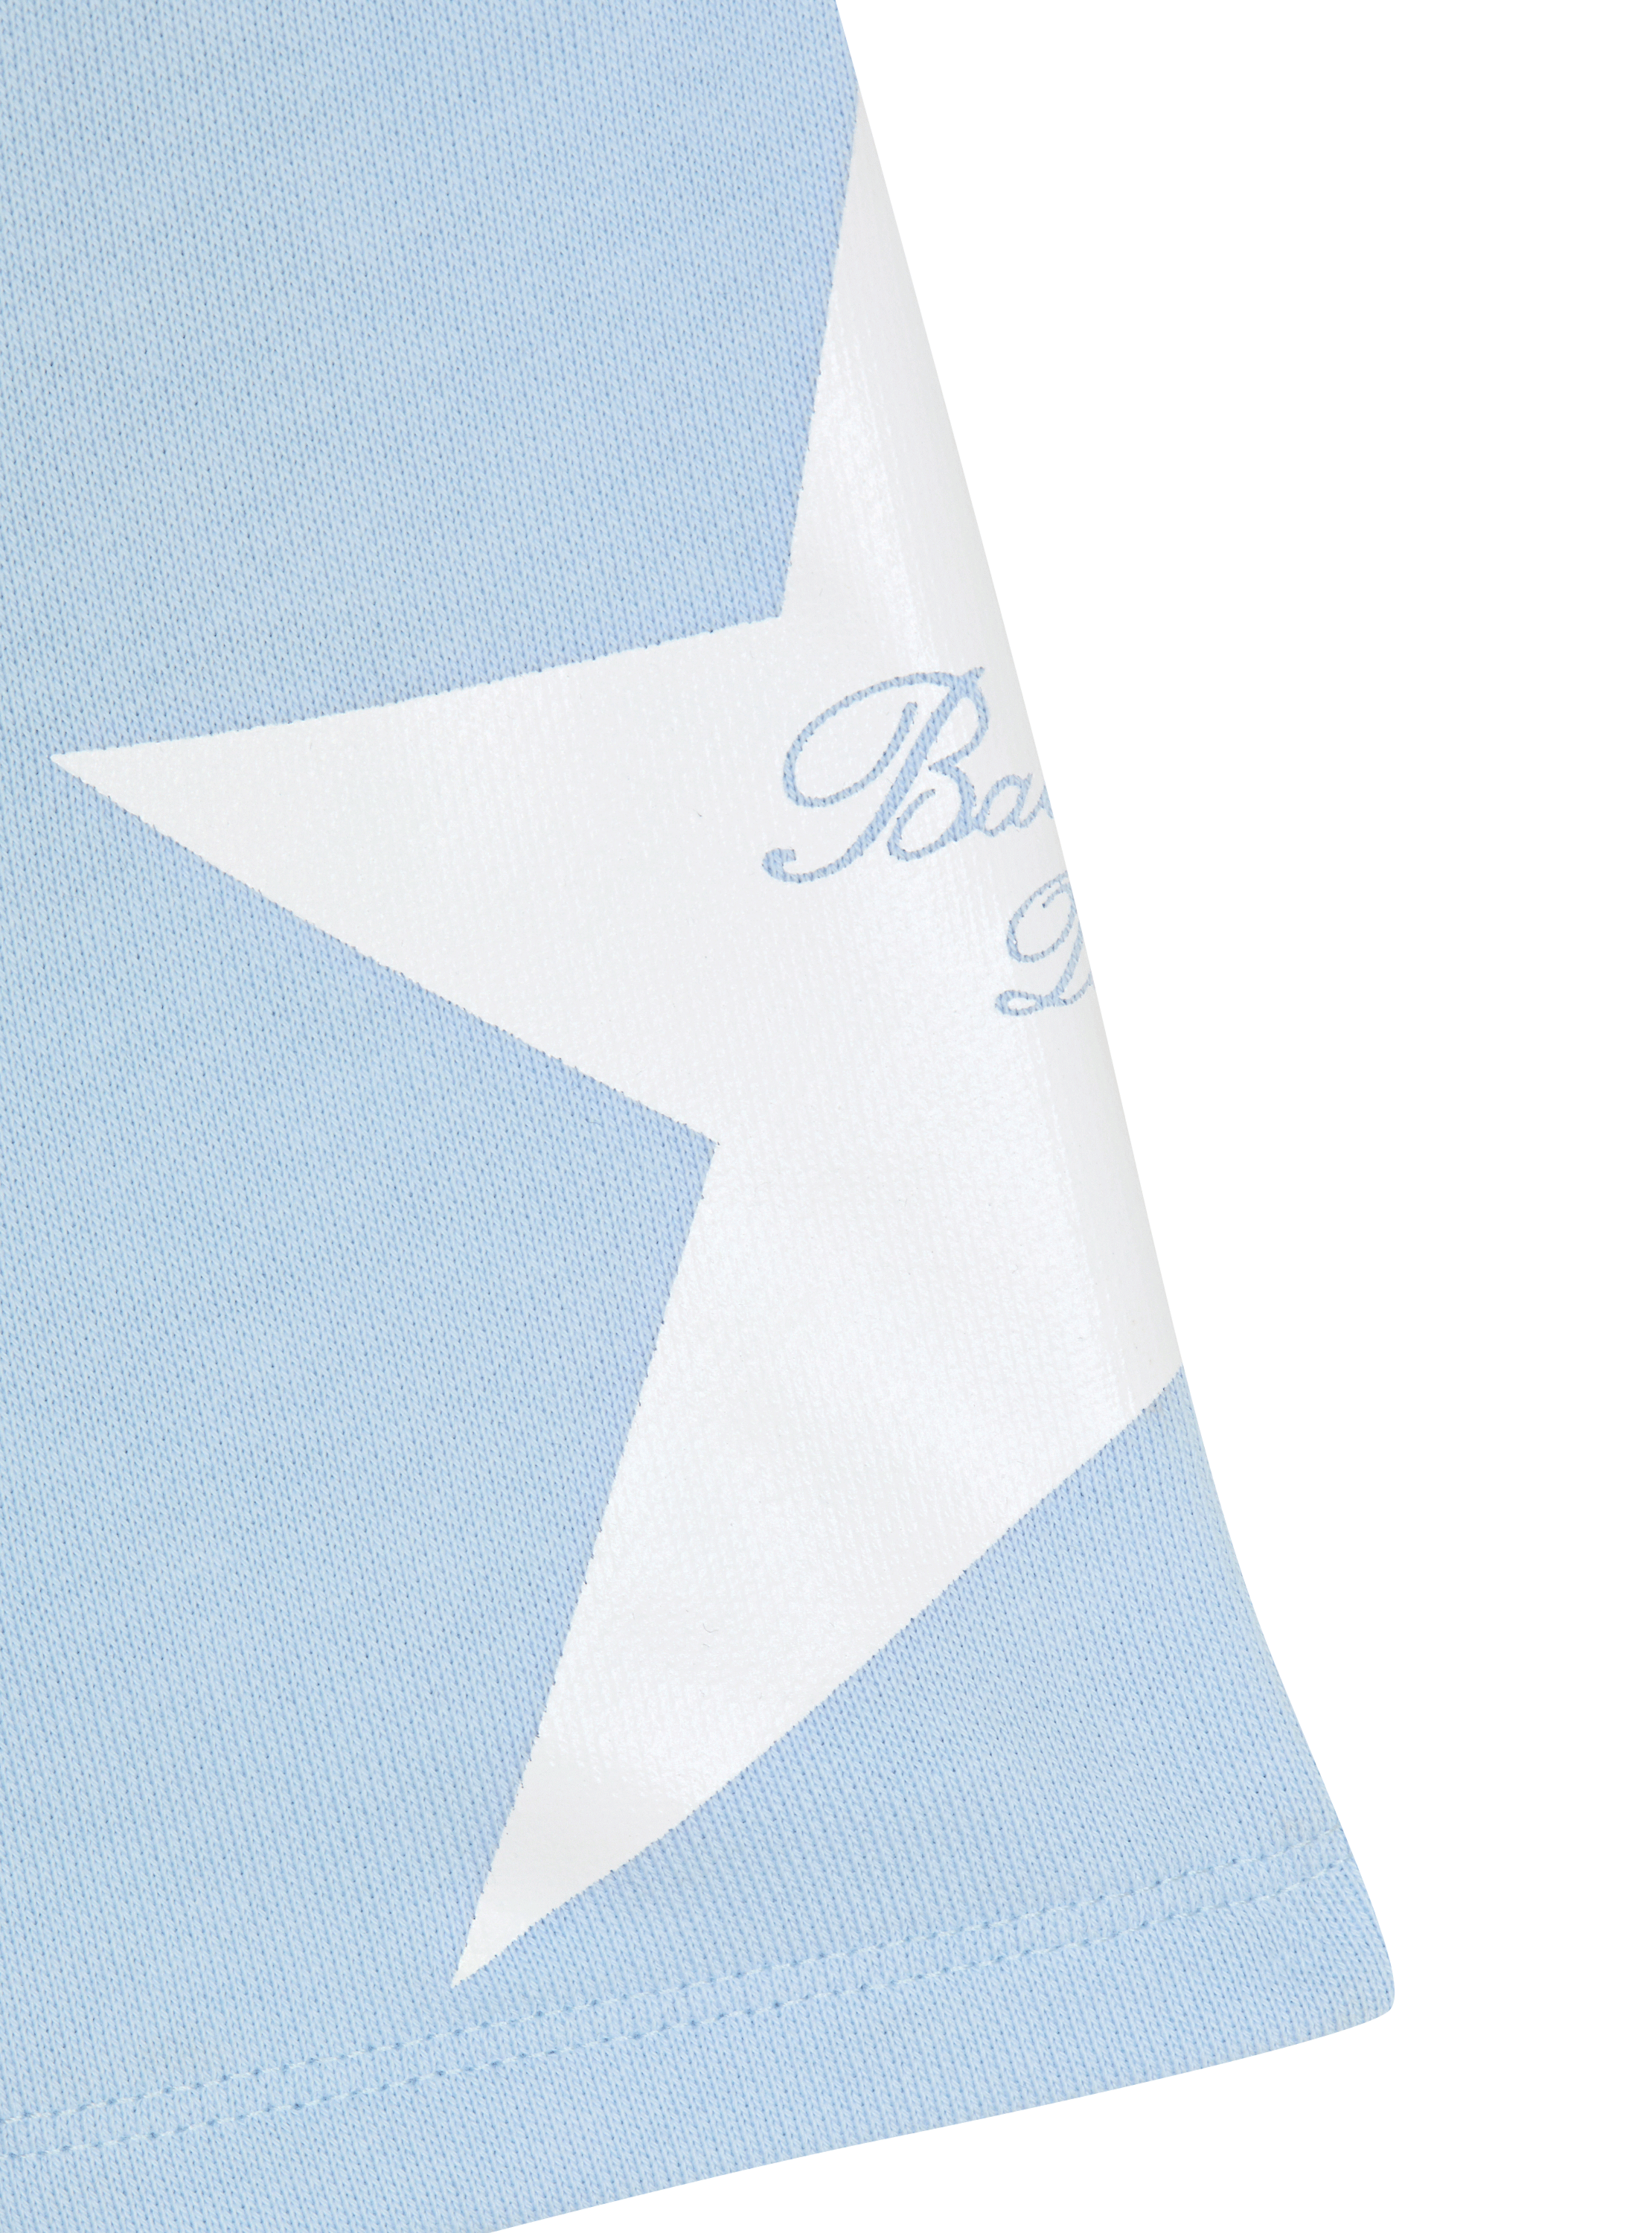 Jersey Balmain Signature Star shorts